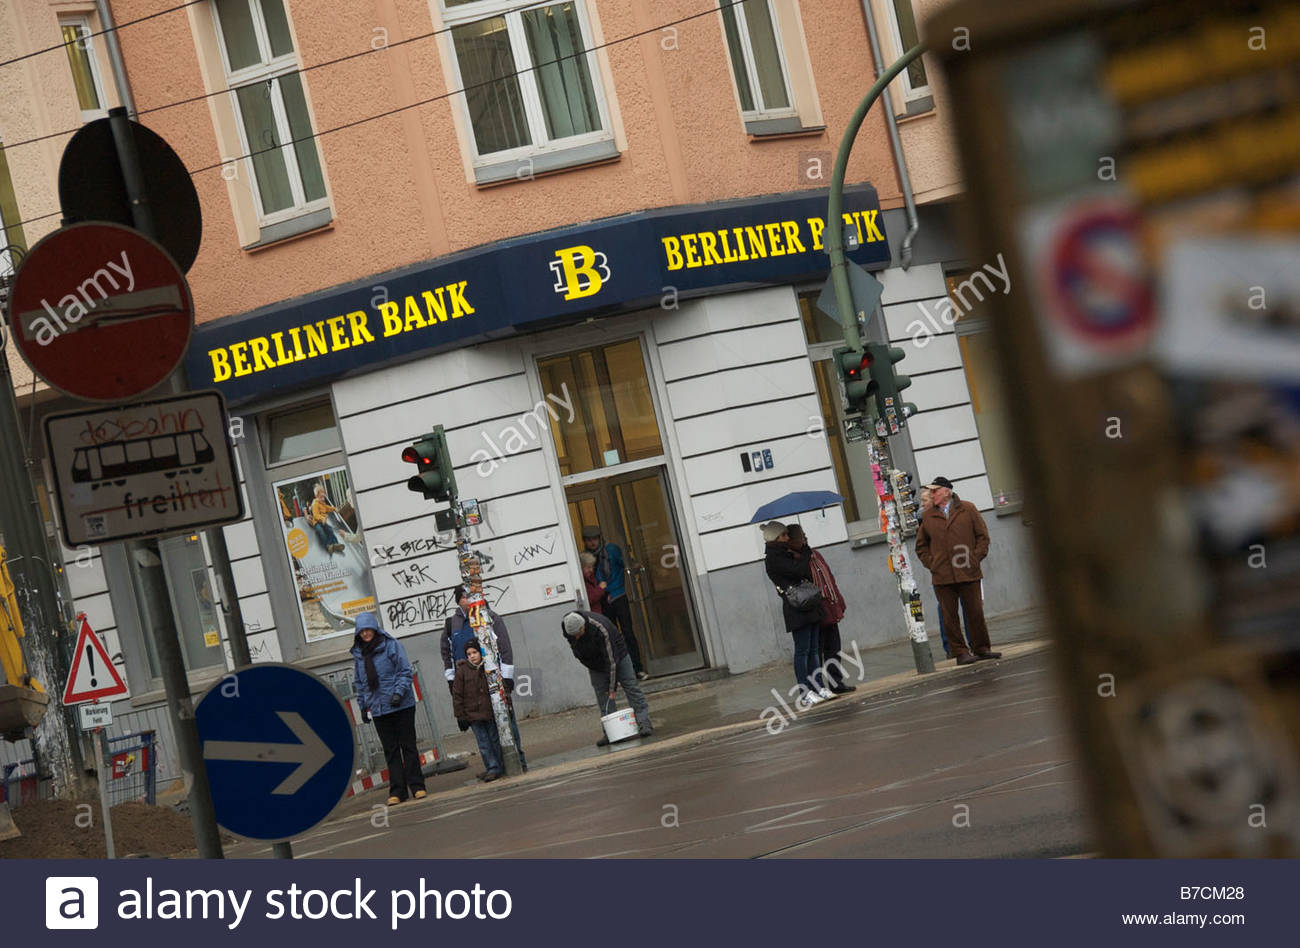 Banking Berliner Bank